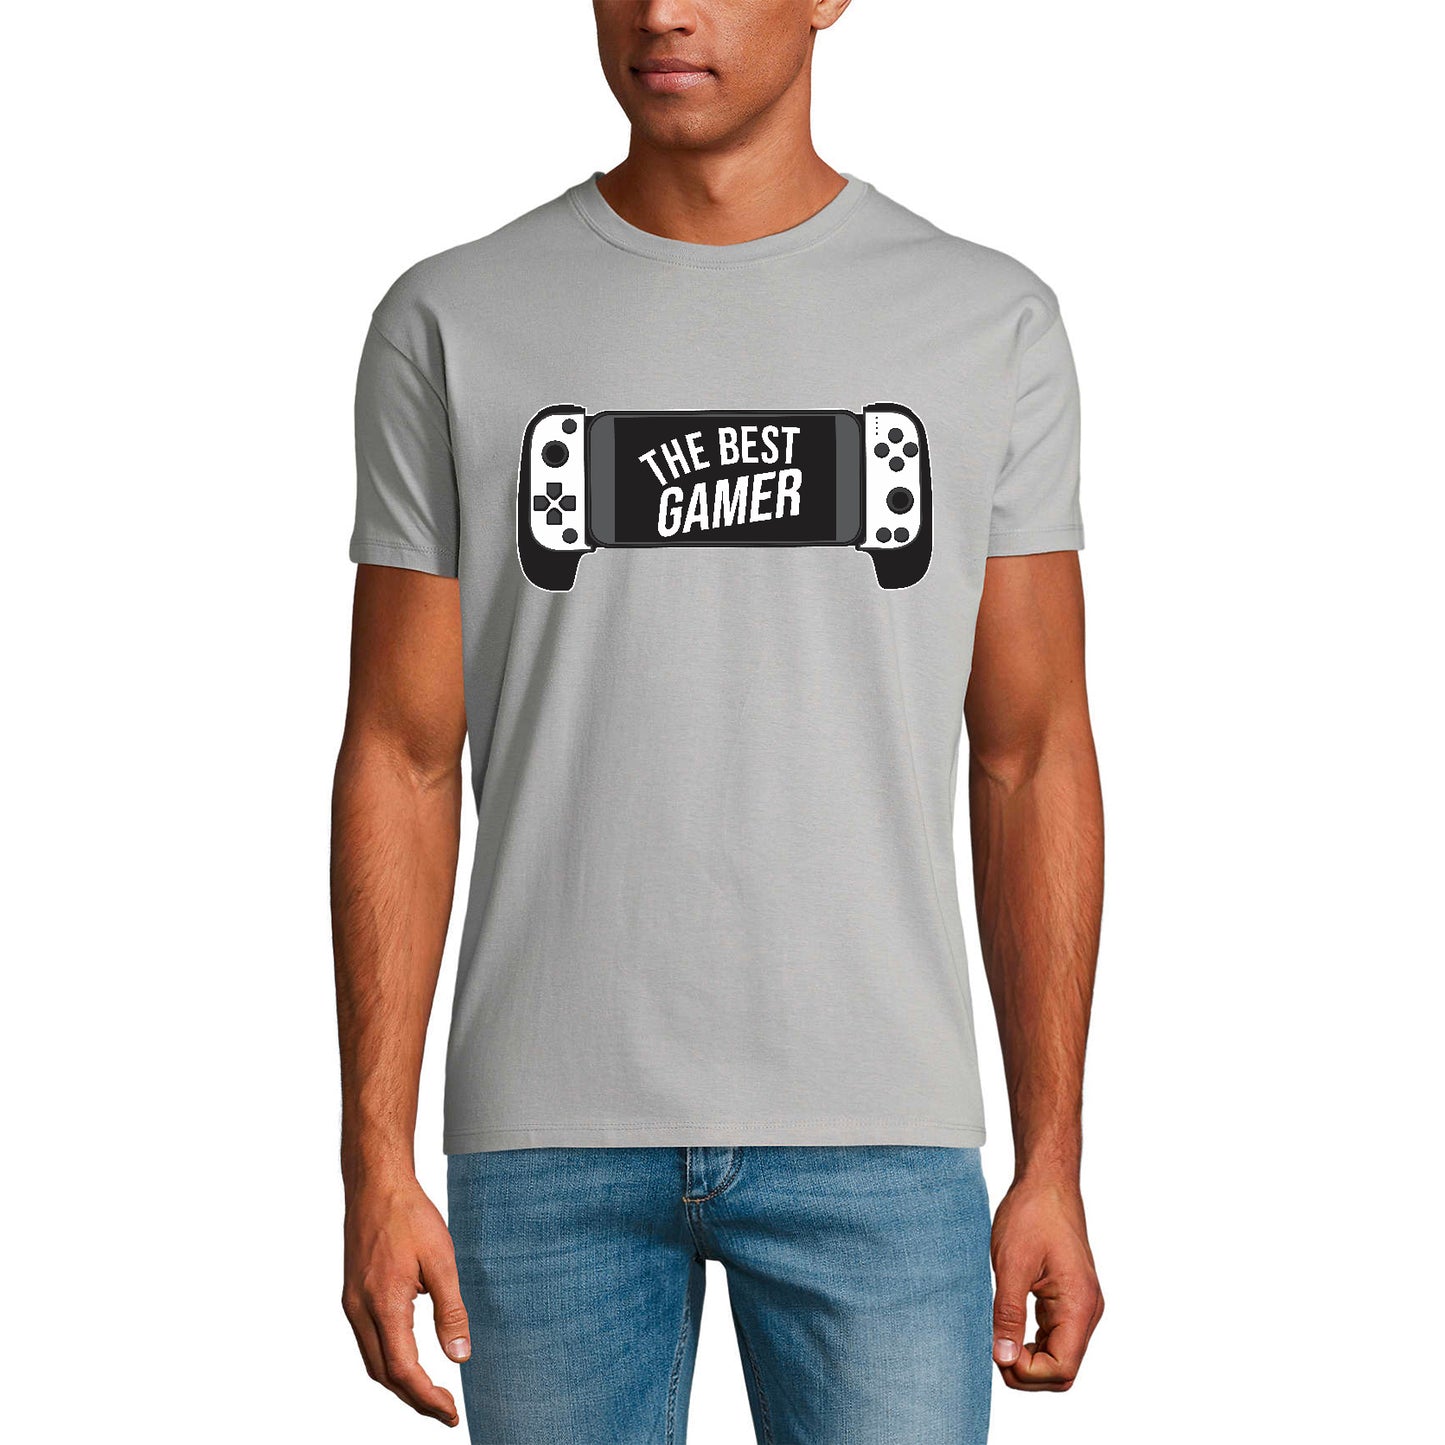 ULTRABASIC Men's Gaming T-Shirt The Best Gamer - Game Controller Gamepad Tee Shirt